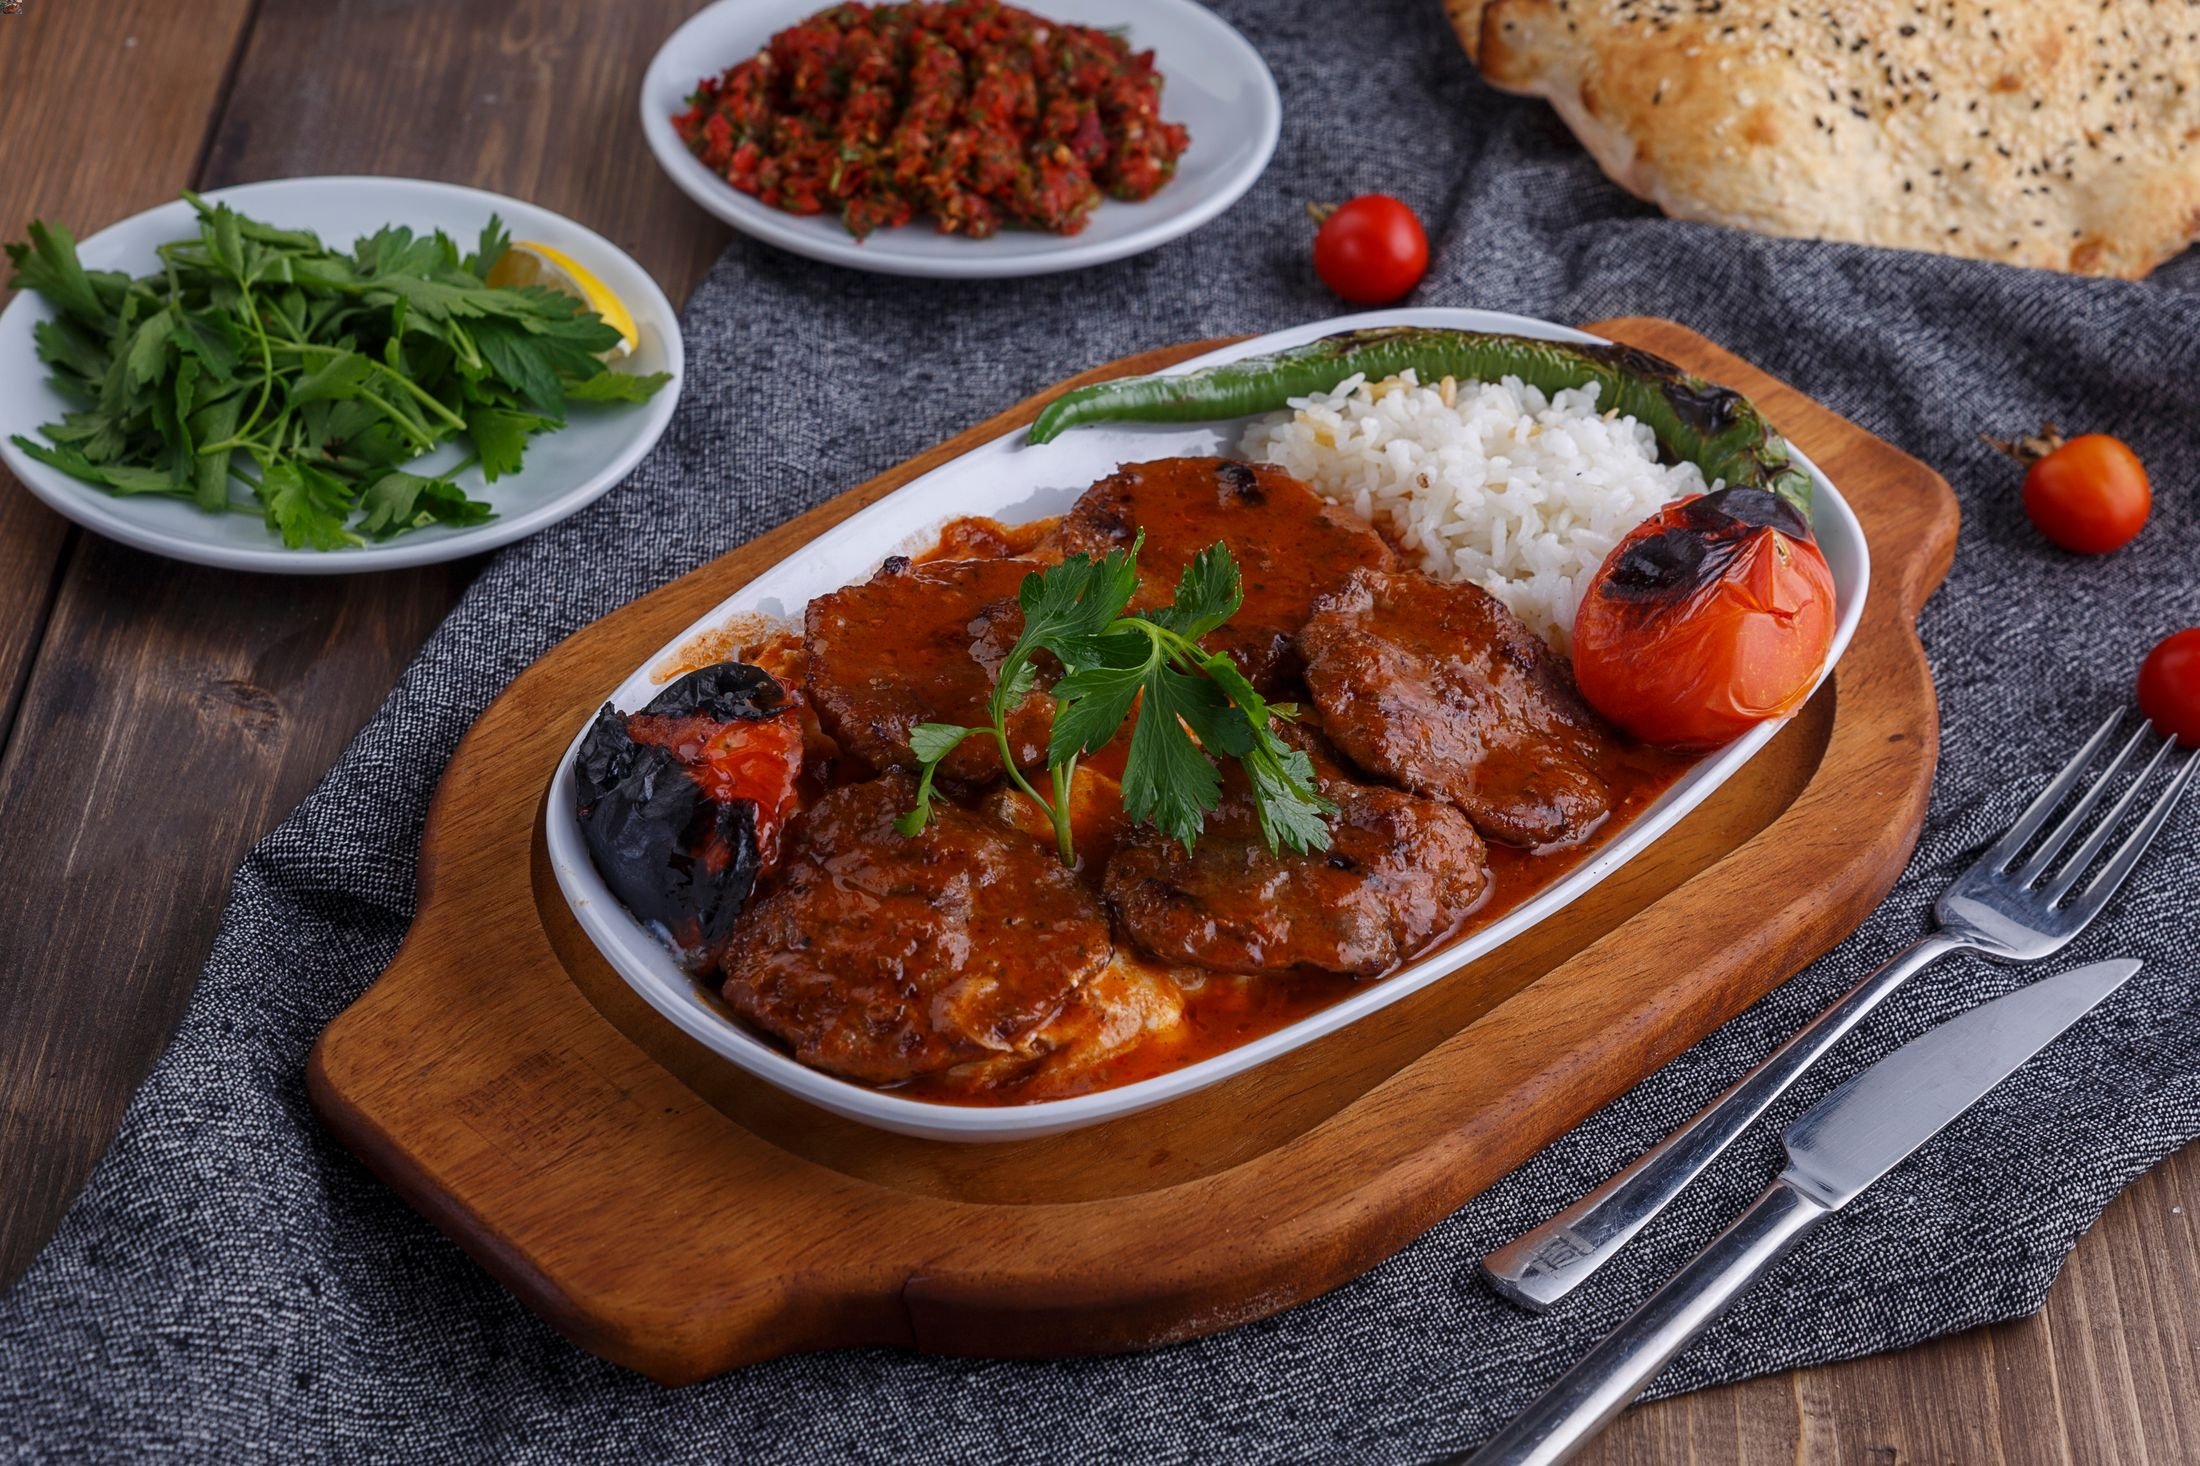 Iskender kebab is one of the staple traditional dishes of Bursa, Türkiye. (Shutterstock Photo)